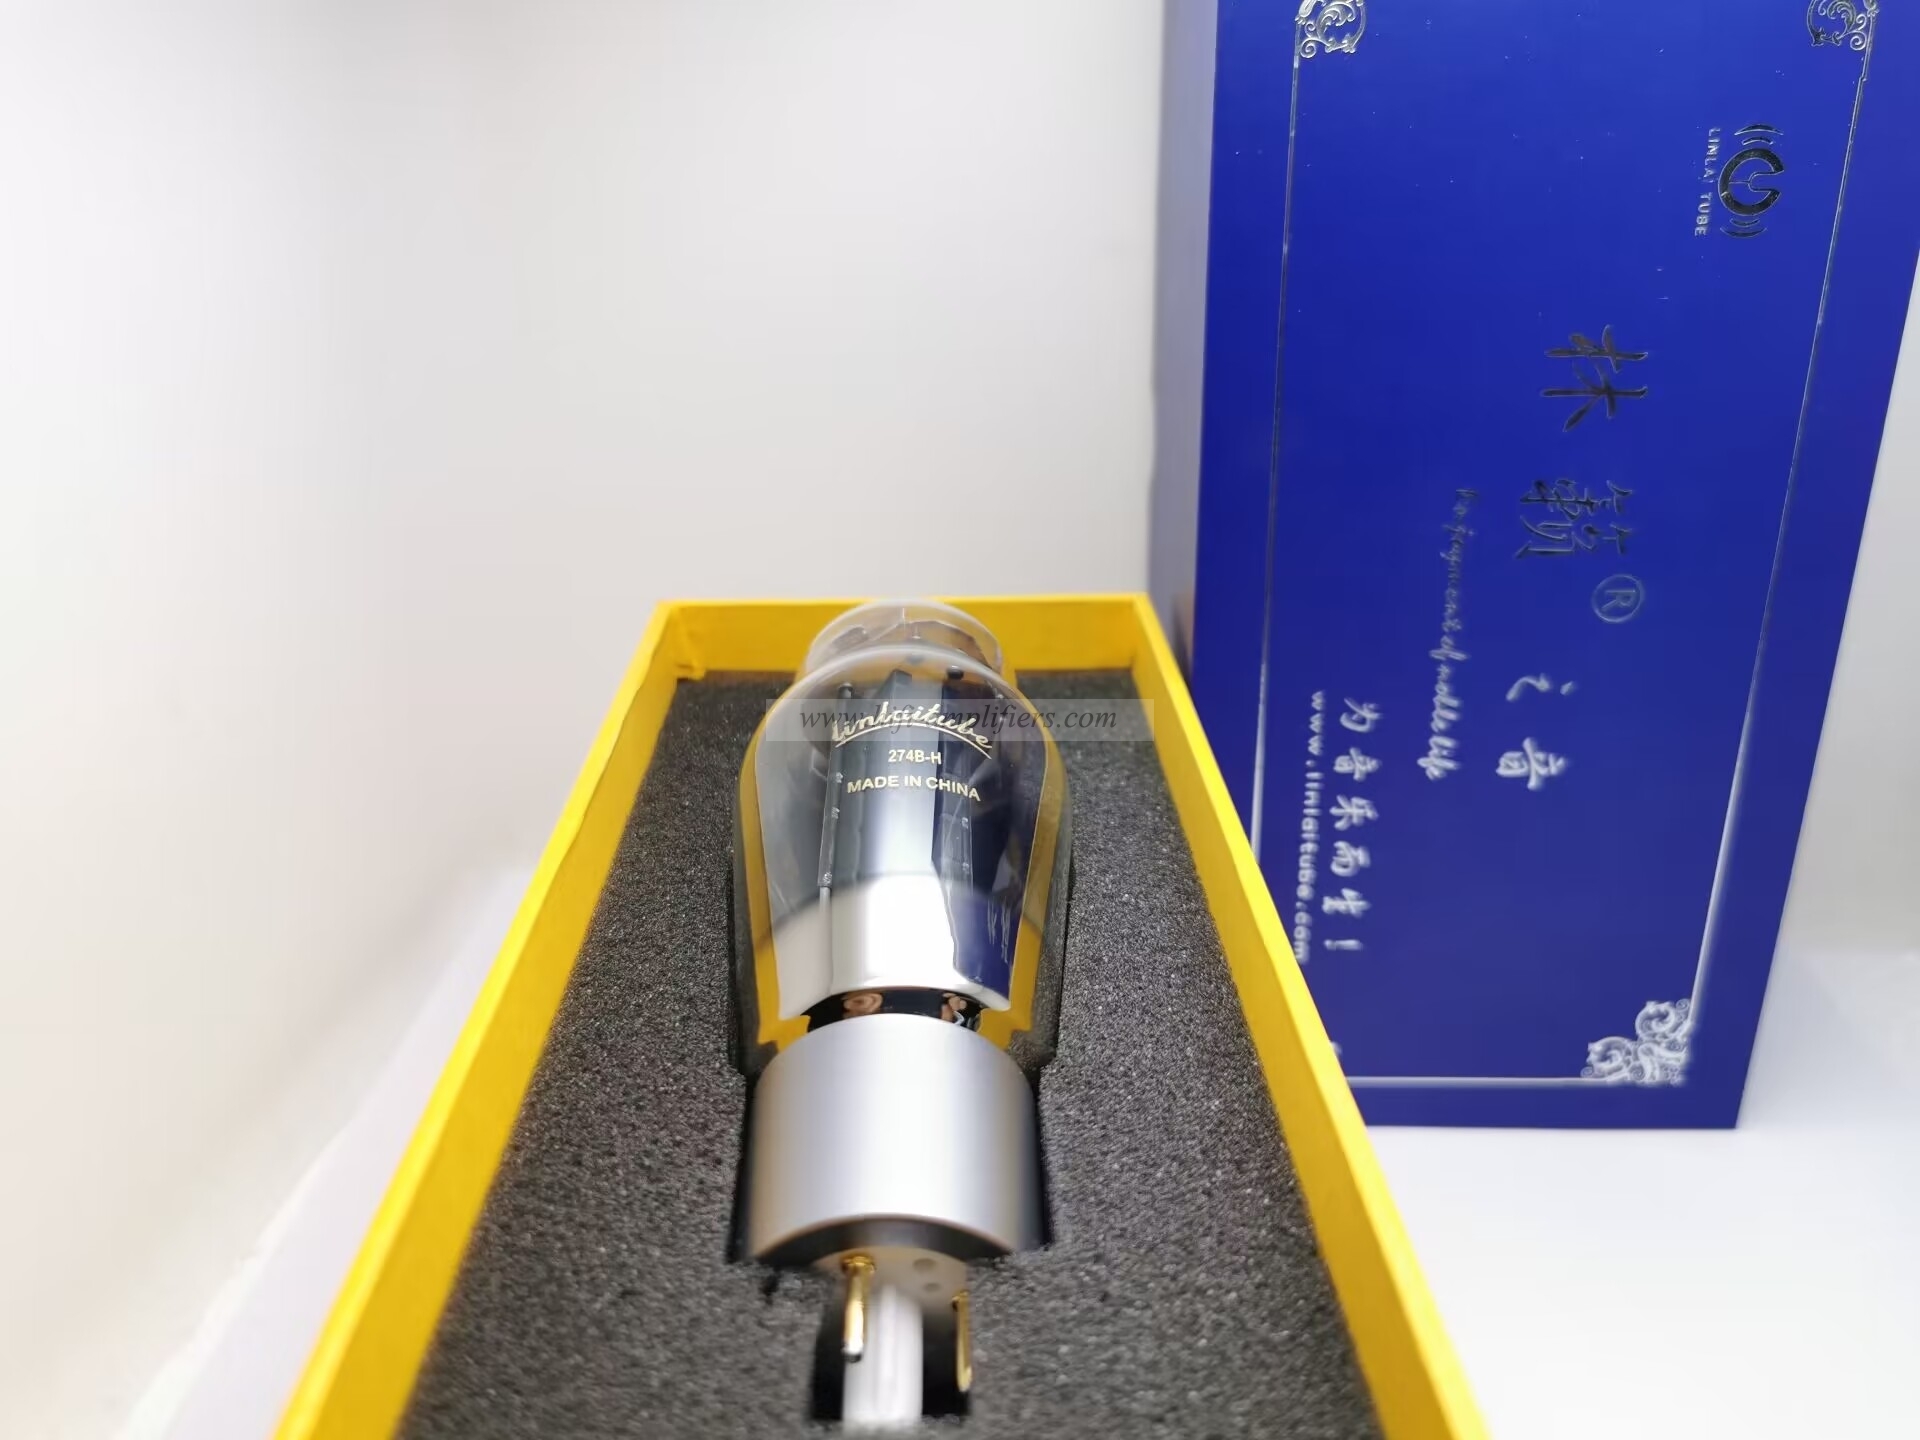 LINLAI 274B-H Hi-end Vacuum Tube Electronic valve Factory Matched Pair